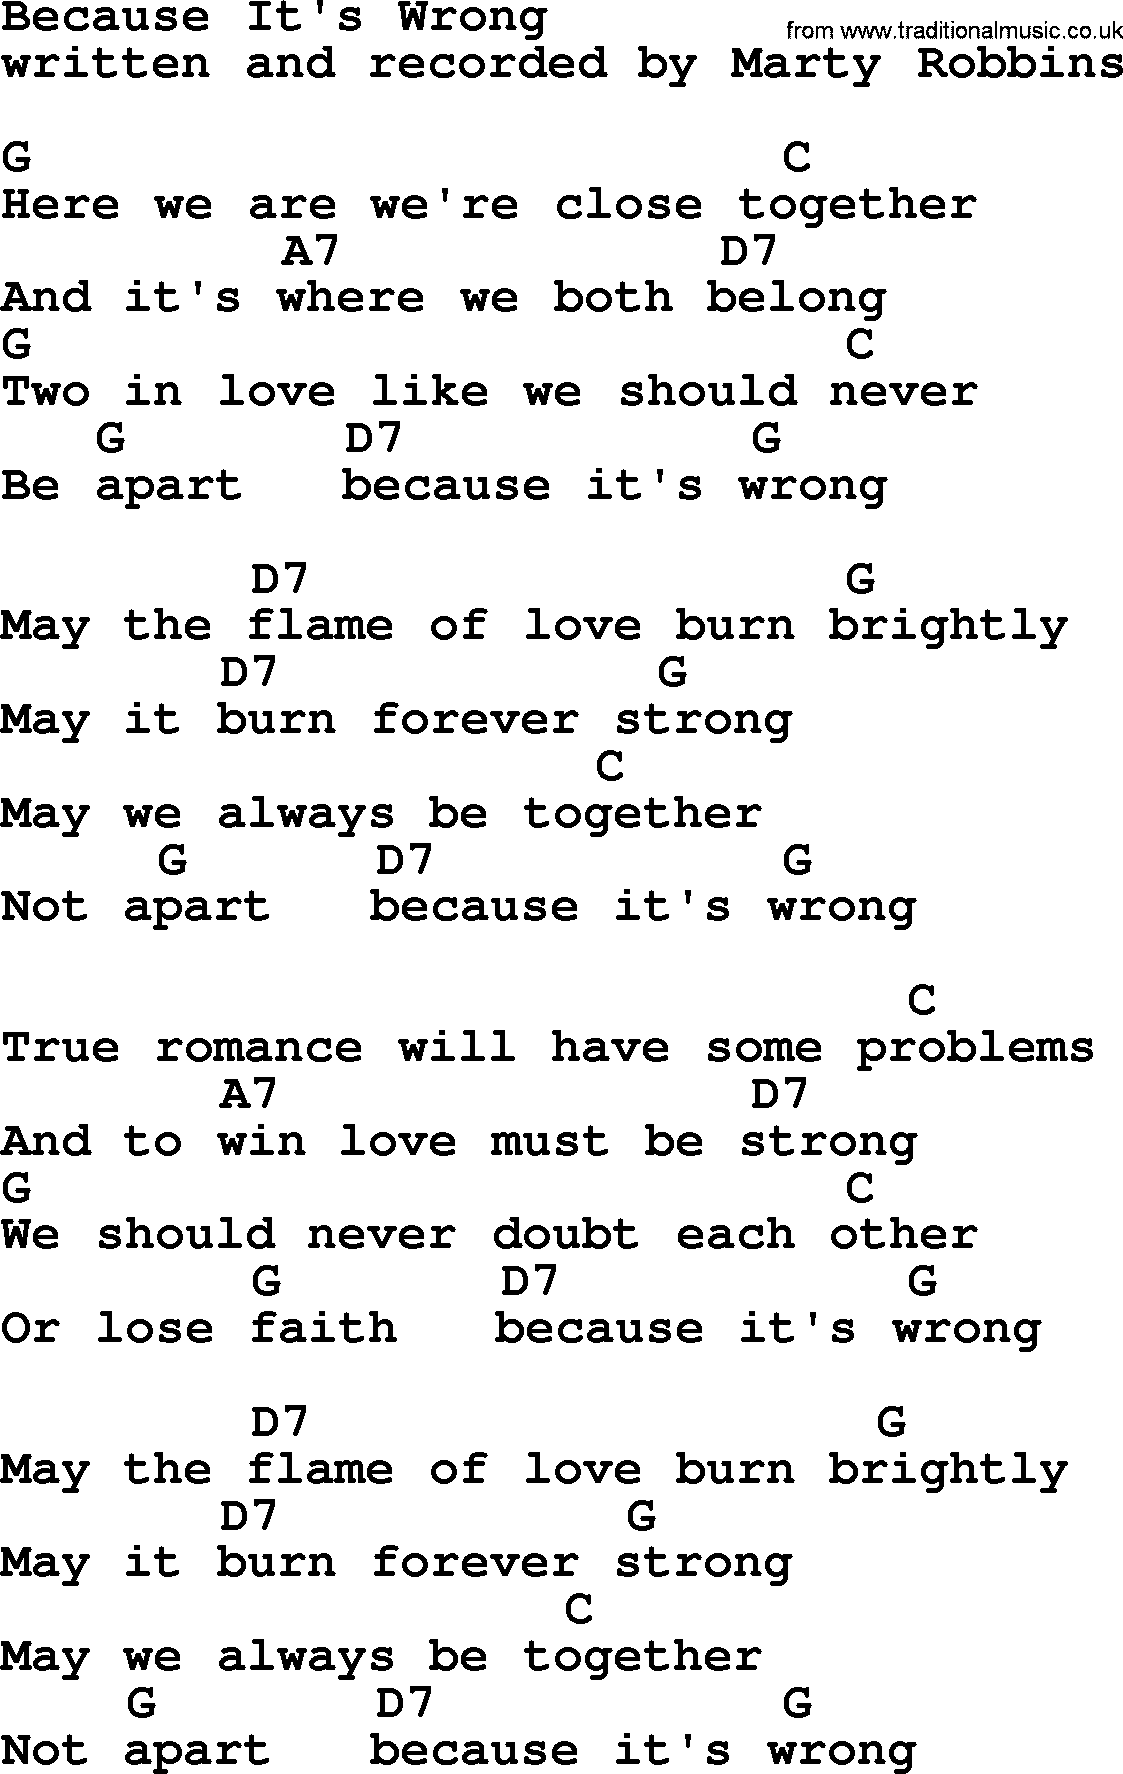 Marty Robbins song: Because It's Wrong, lyrics and chords